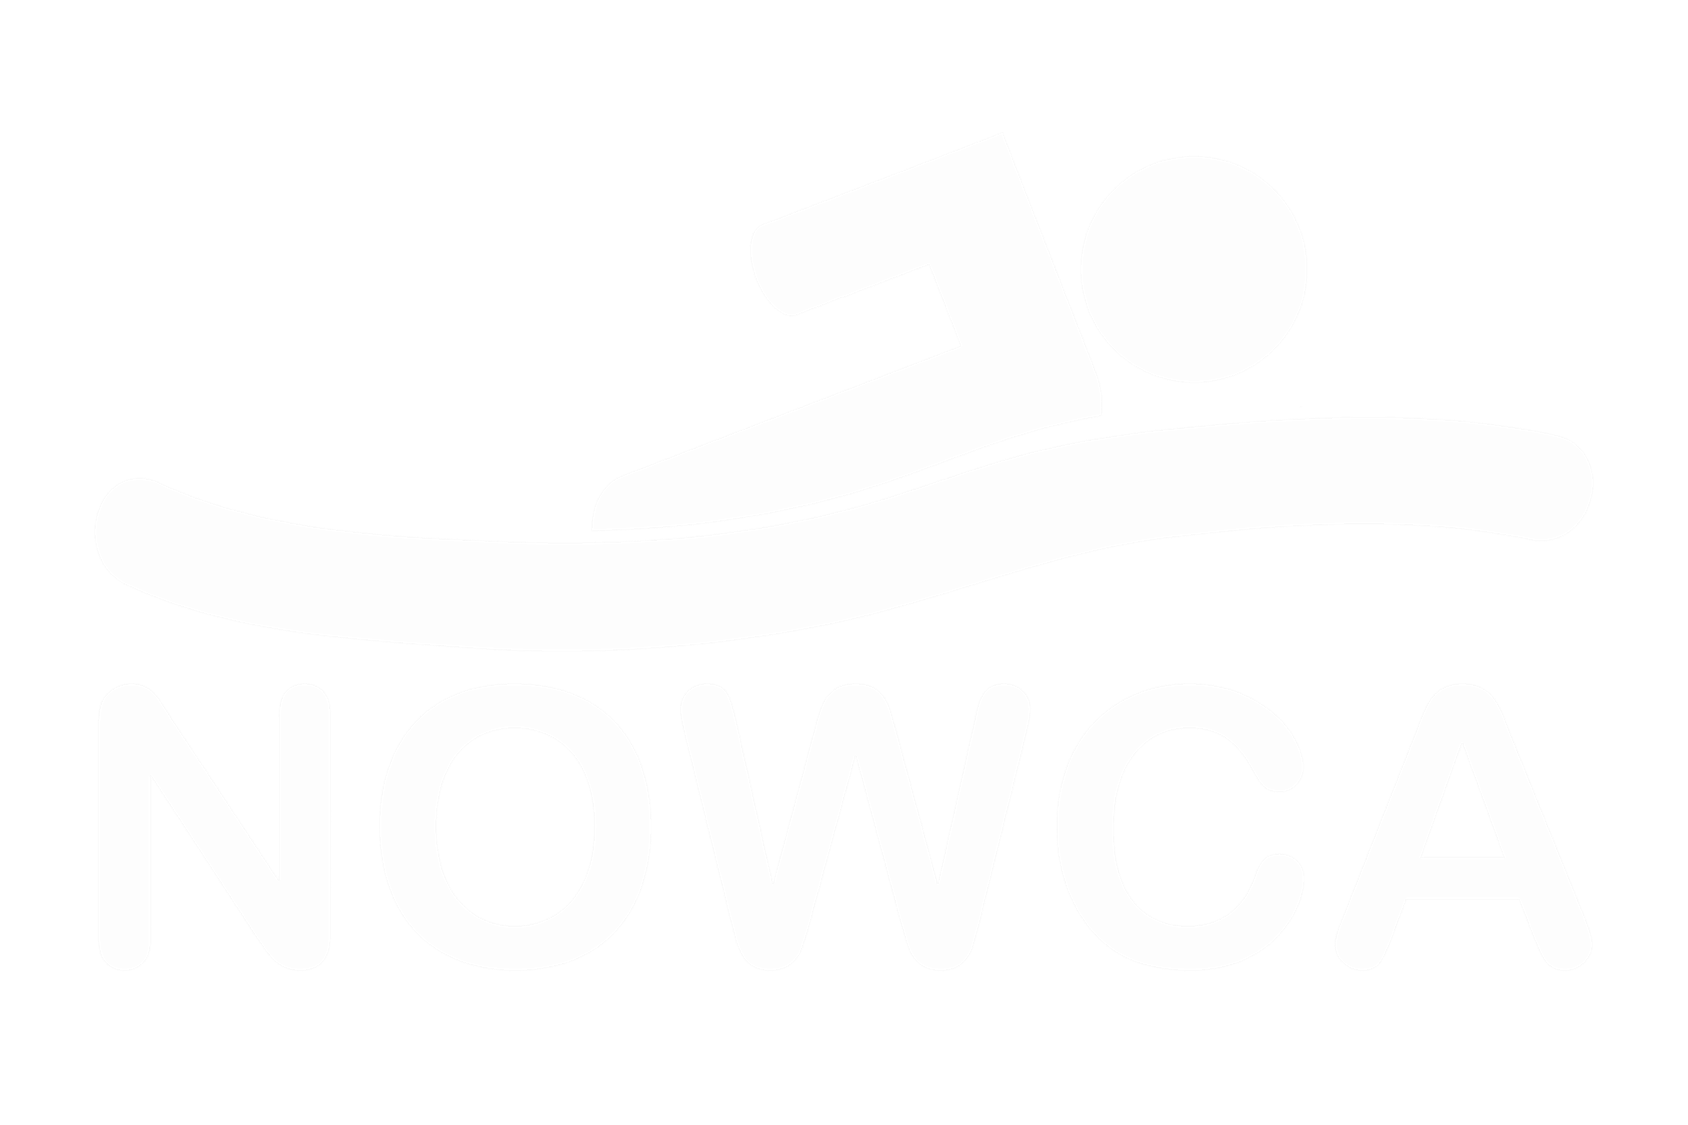 NOWCA - Official website